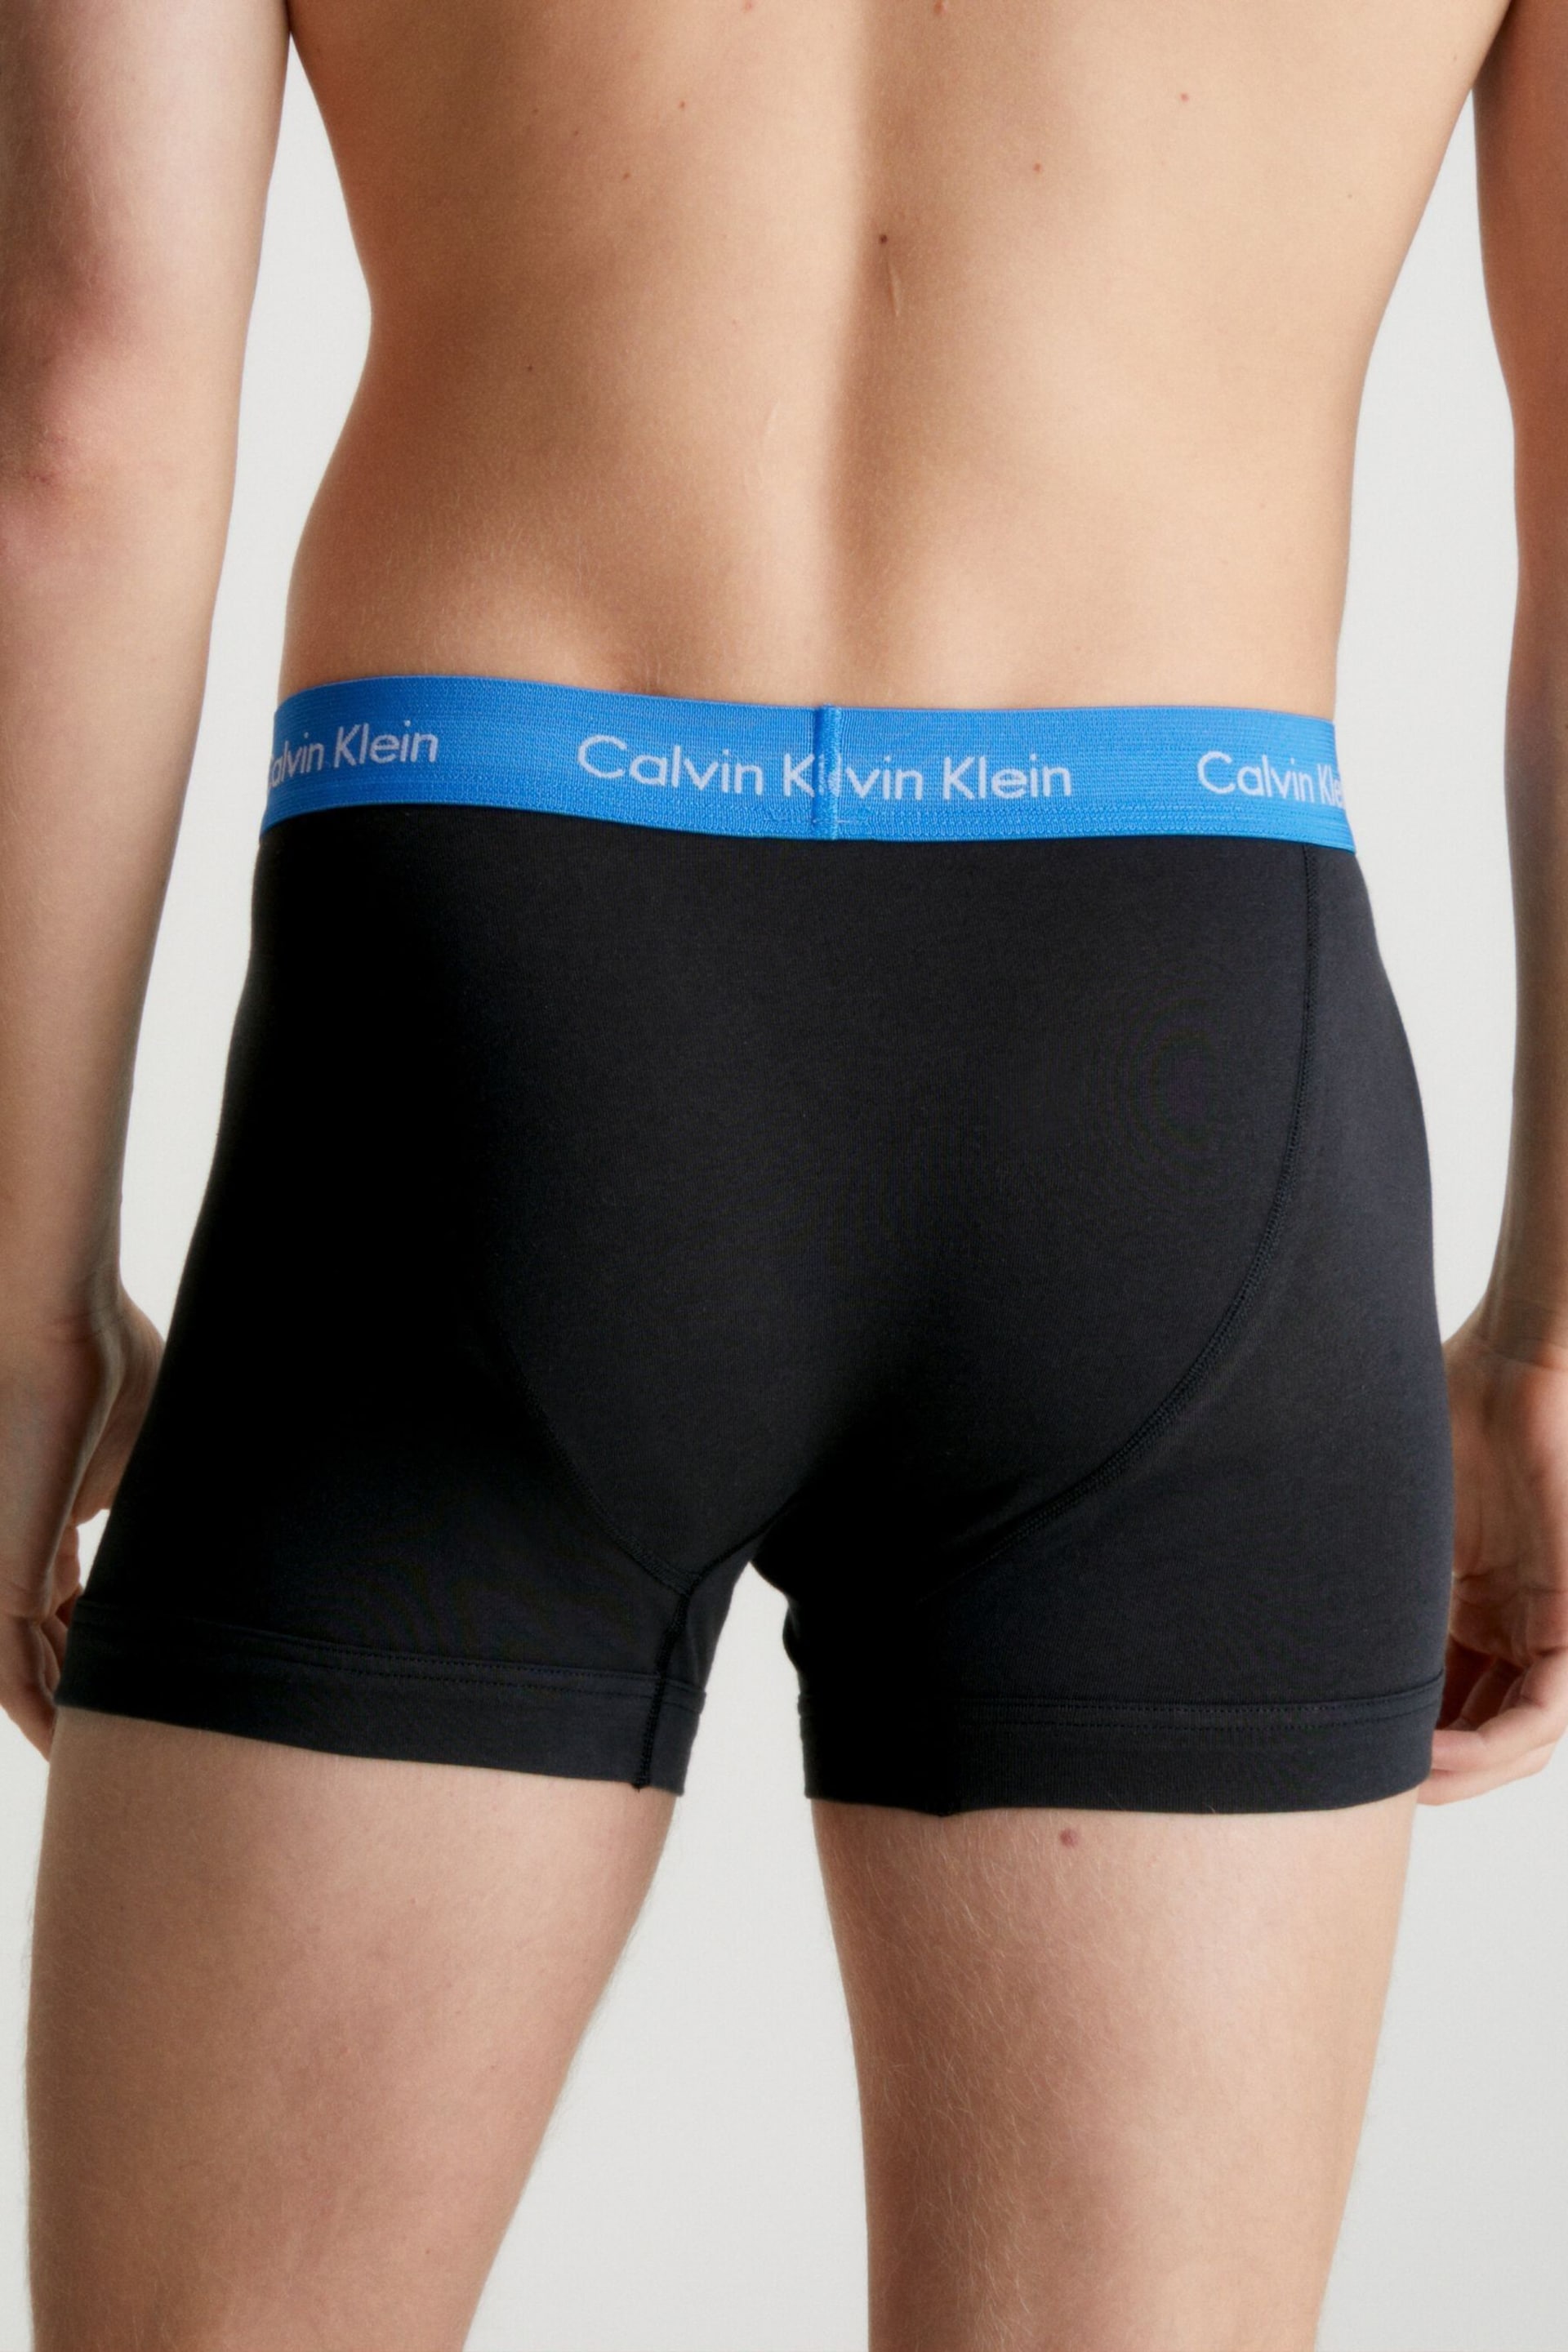 Calvin Klein Black Cotton Trunks 3 Pack - Image 3 of 4